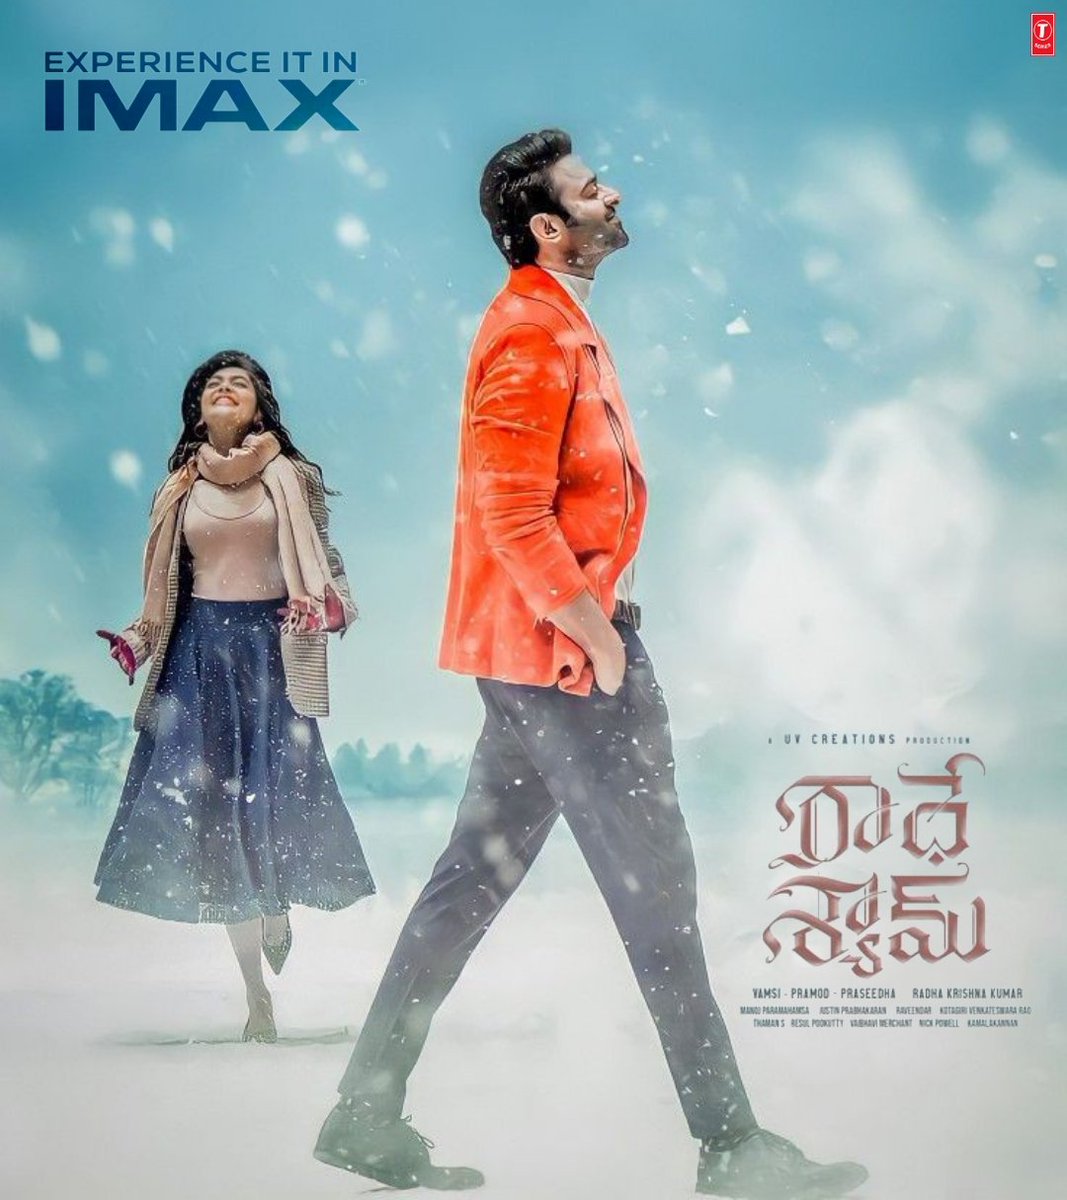 If films got IMAX posters

Radhe Shyam (2022)